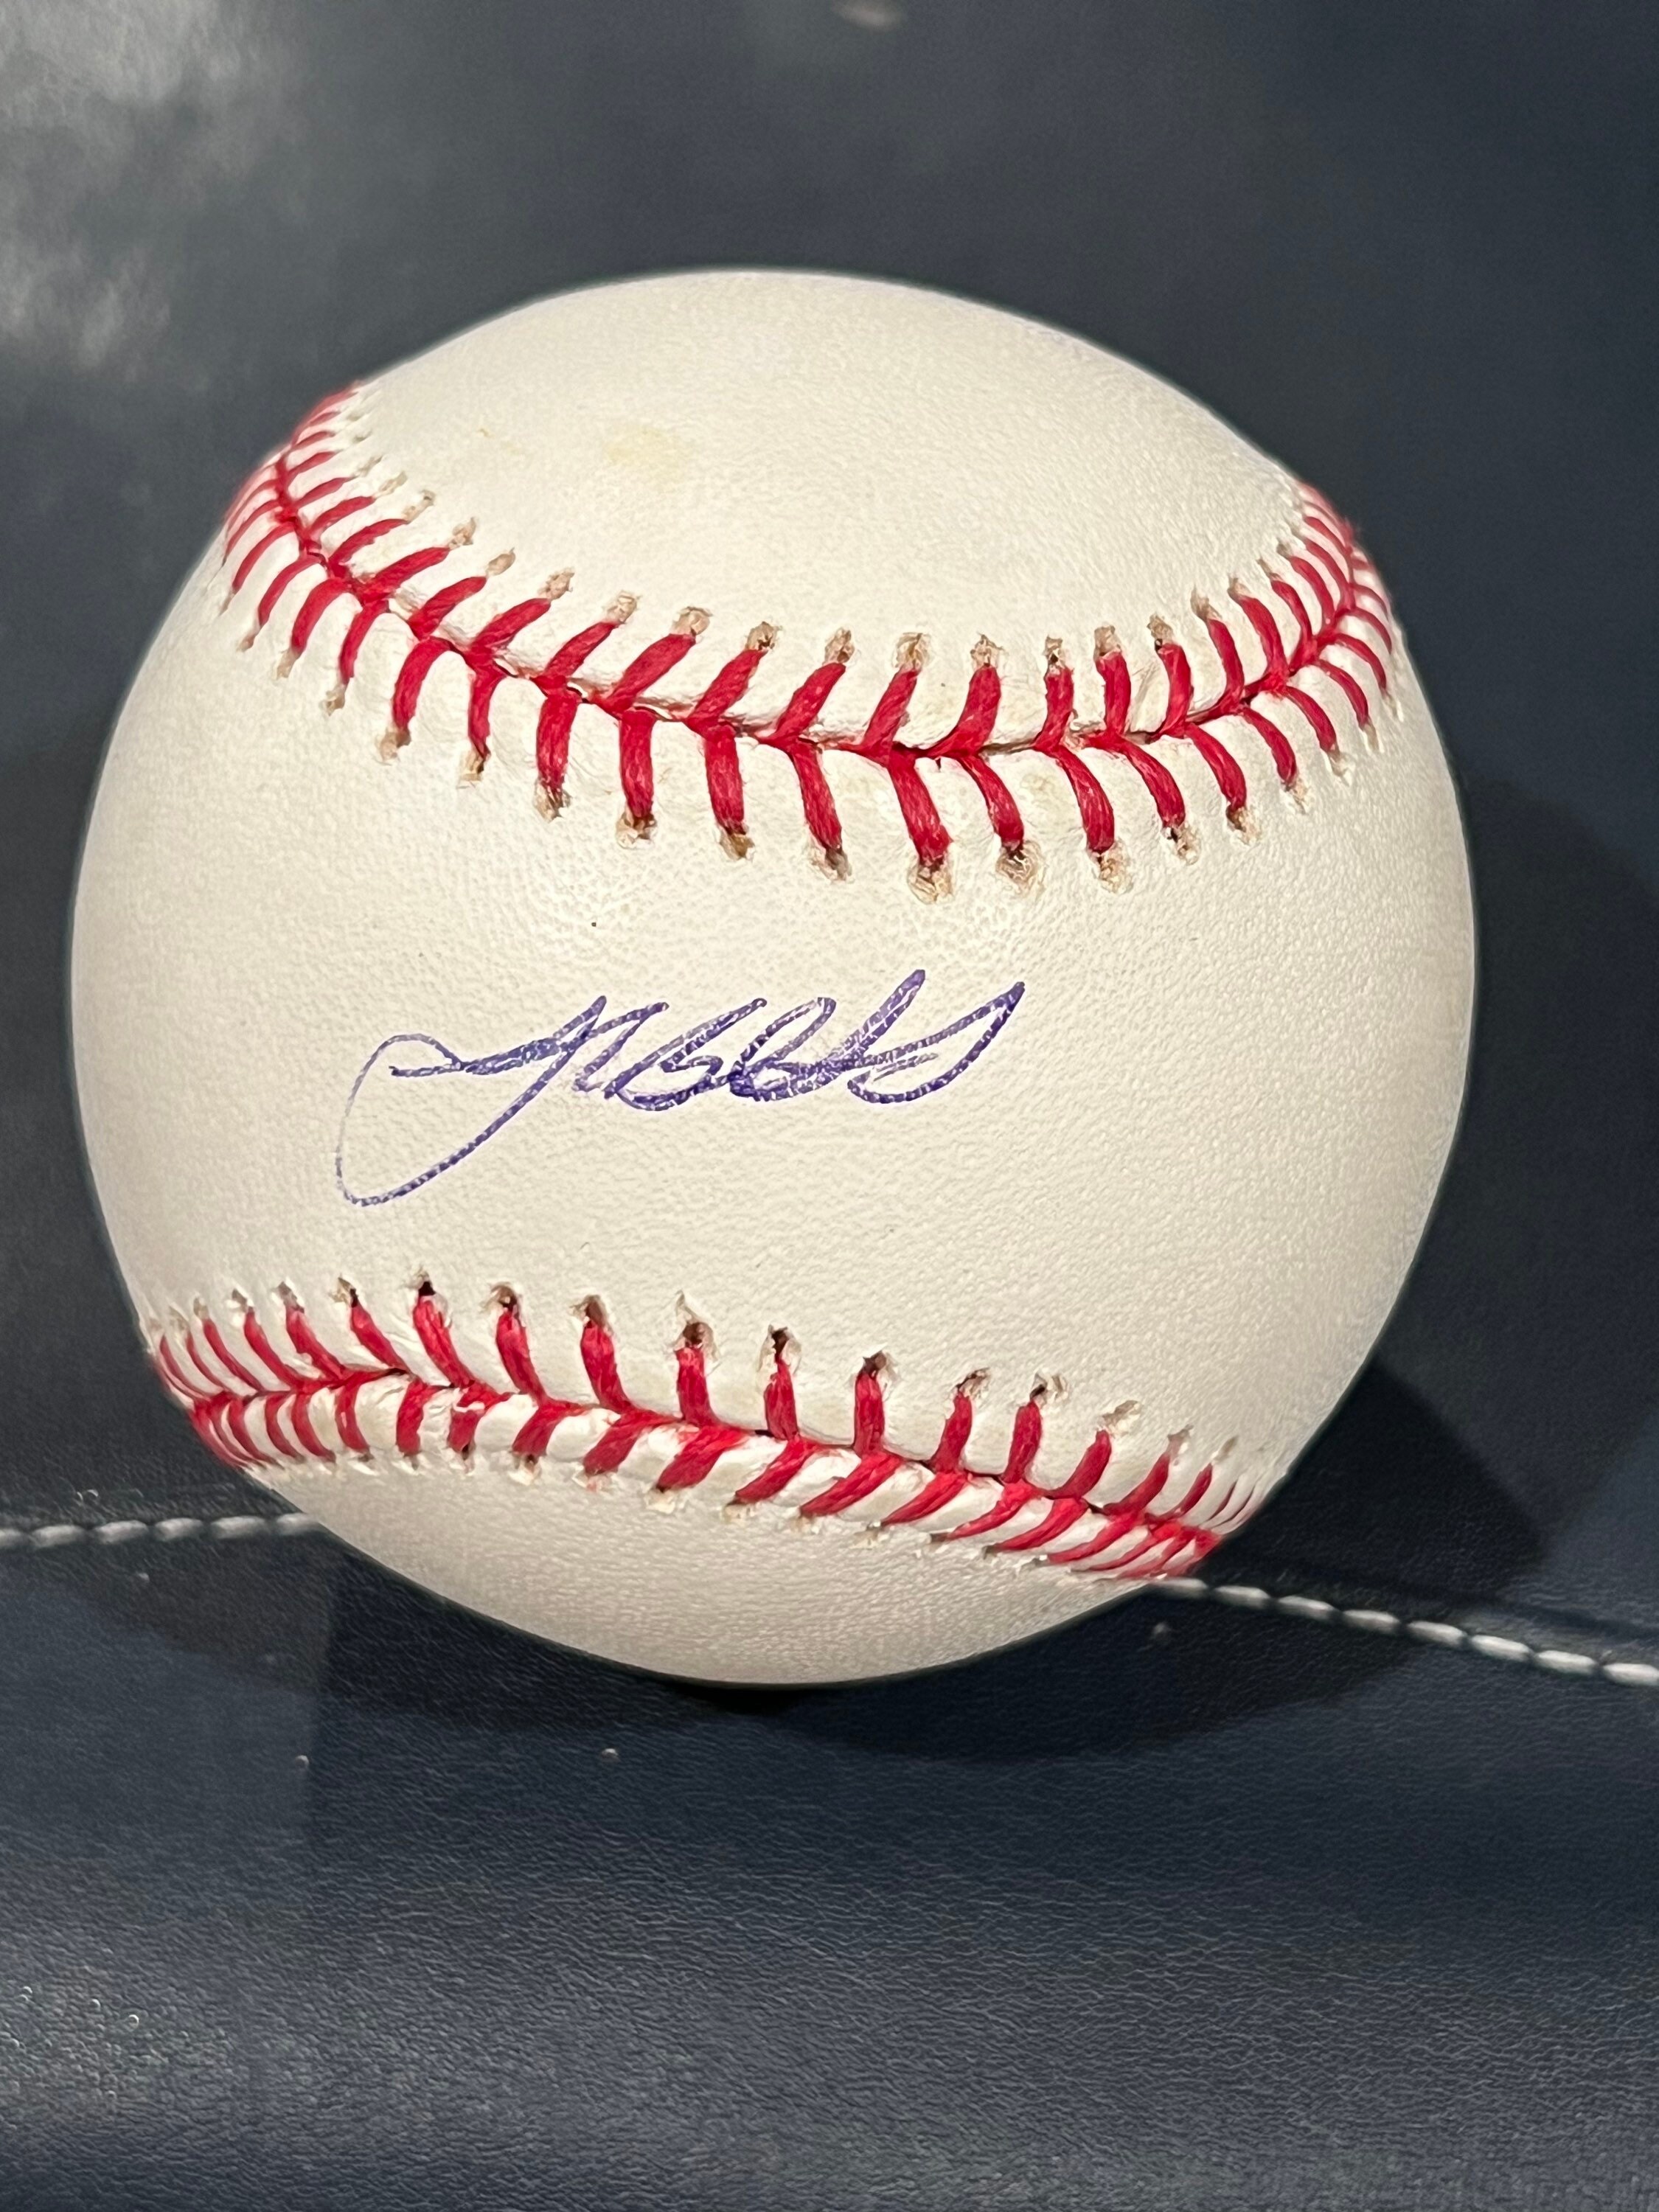 Paul Molitor Signed OML Baseball with Multiple Inscriptions